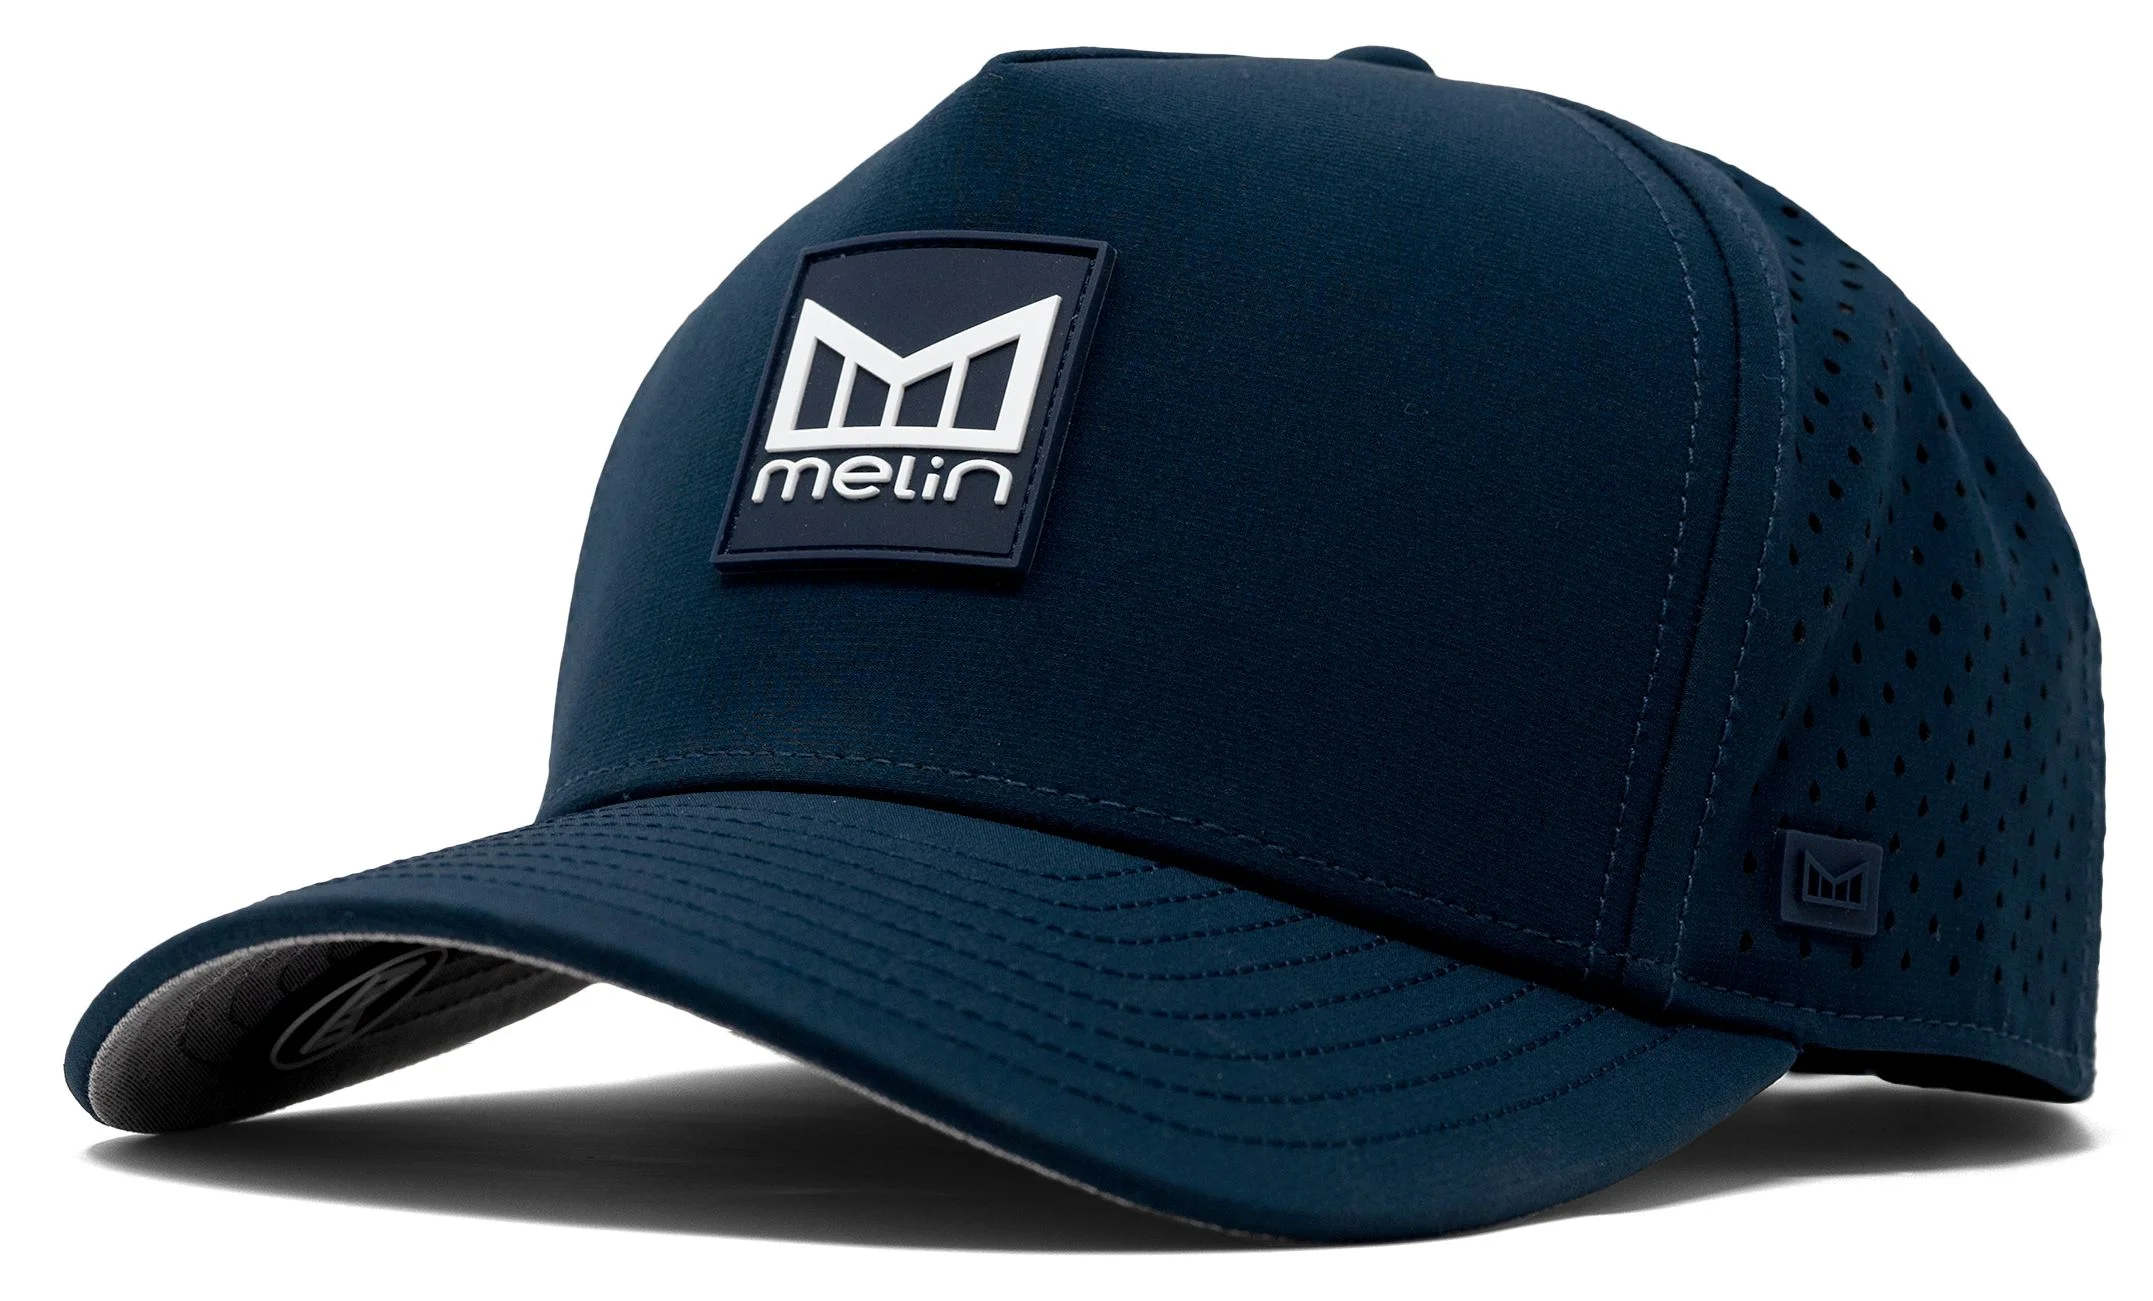 melin hats discount